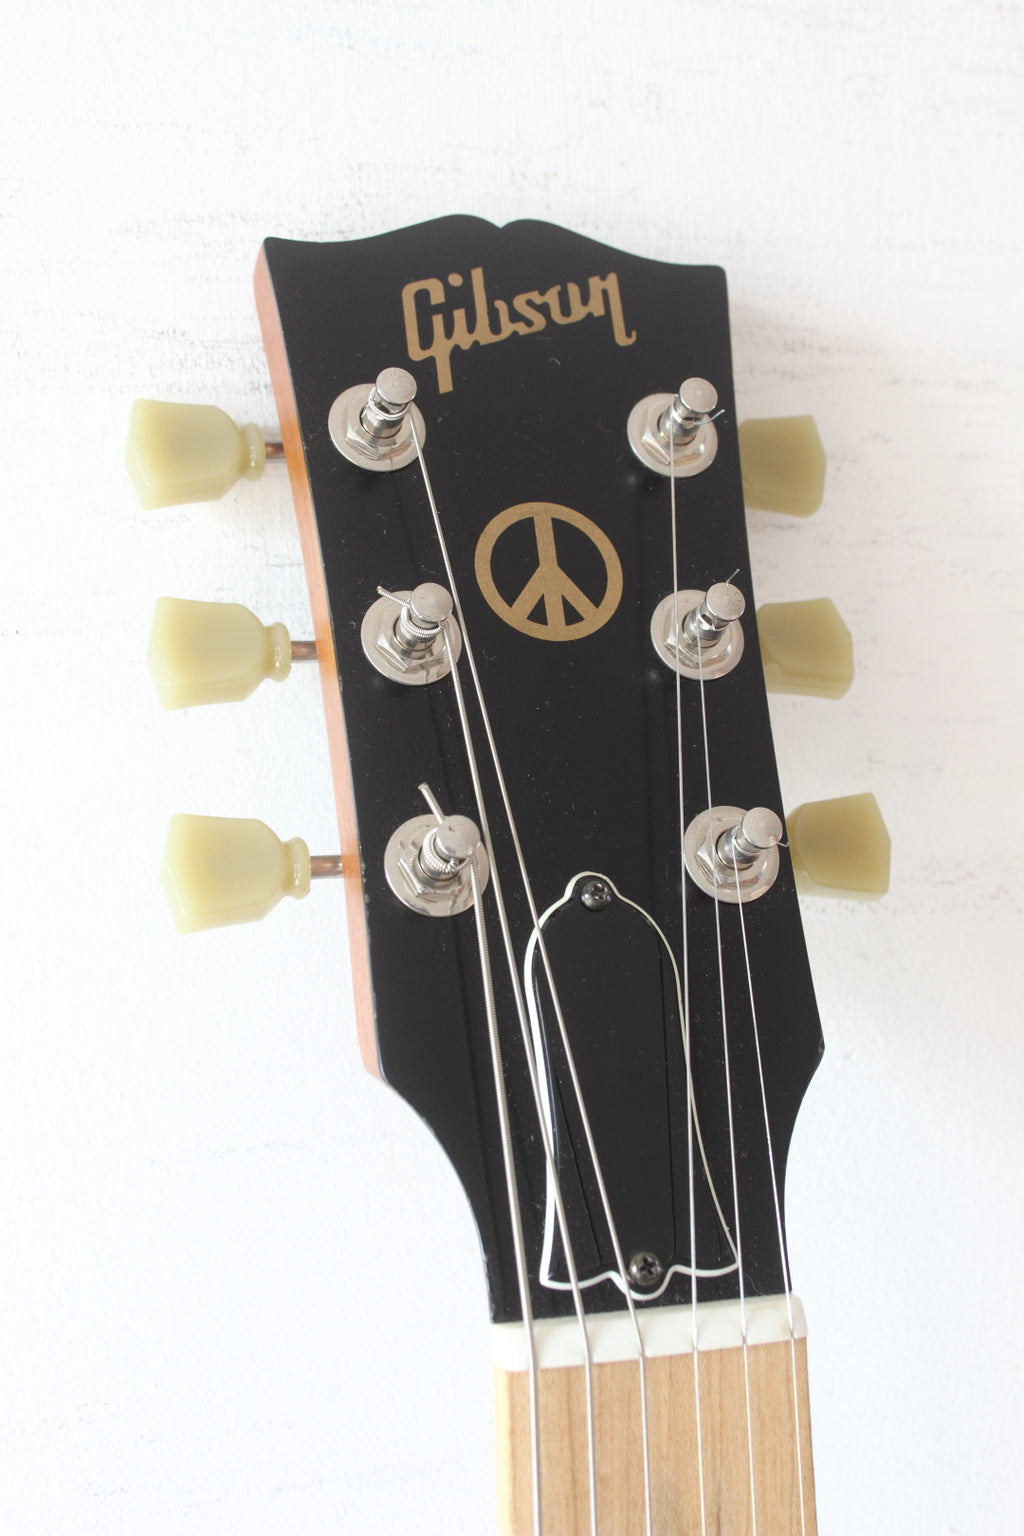 Gibson Les Paul Junior Double Cutaway Revolution' Blue Tie Dye 2009